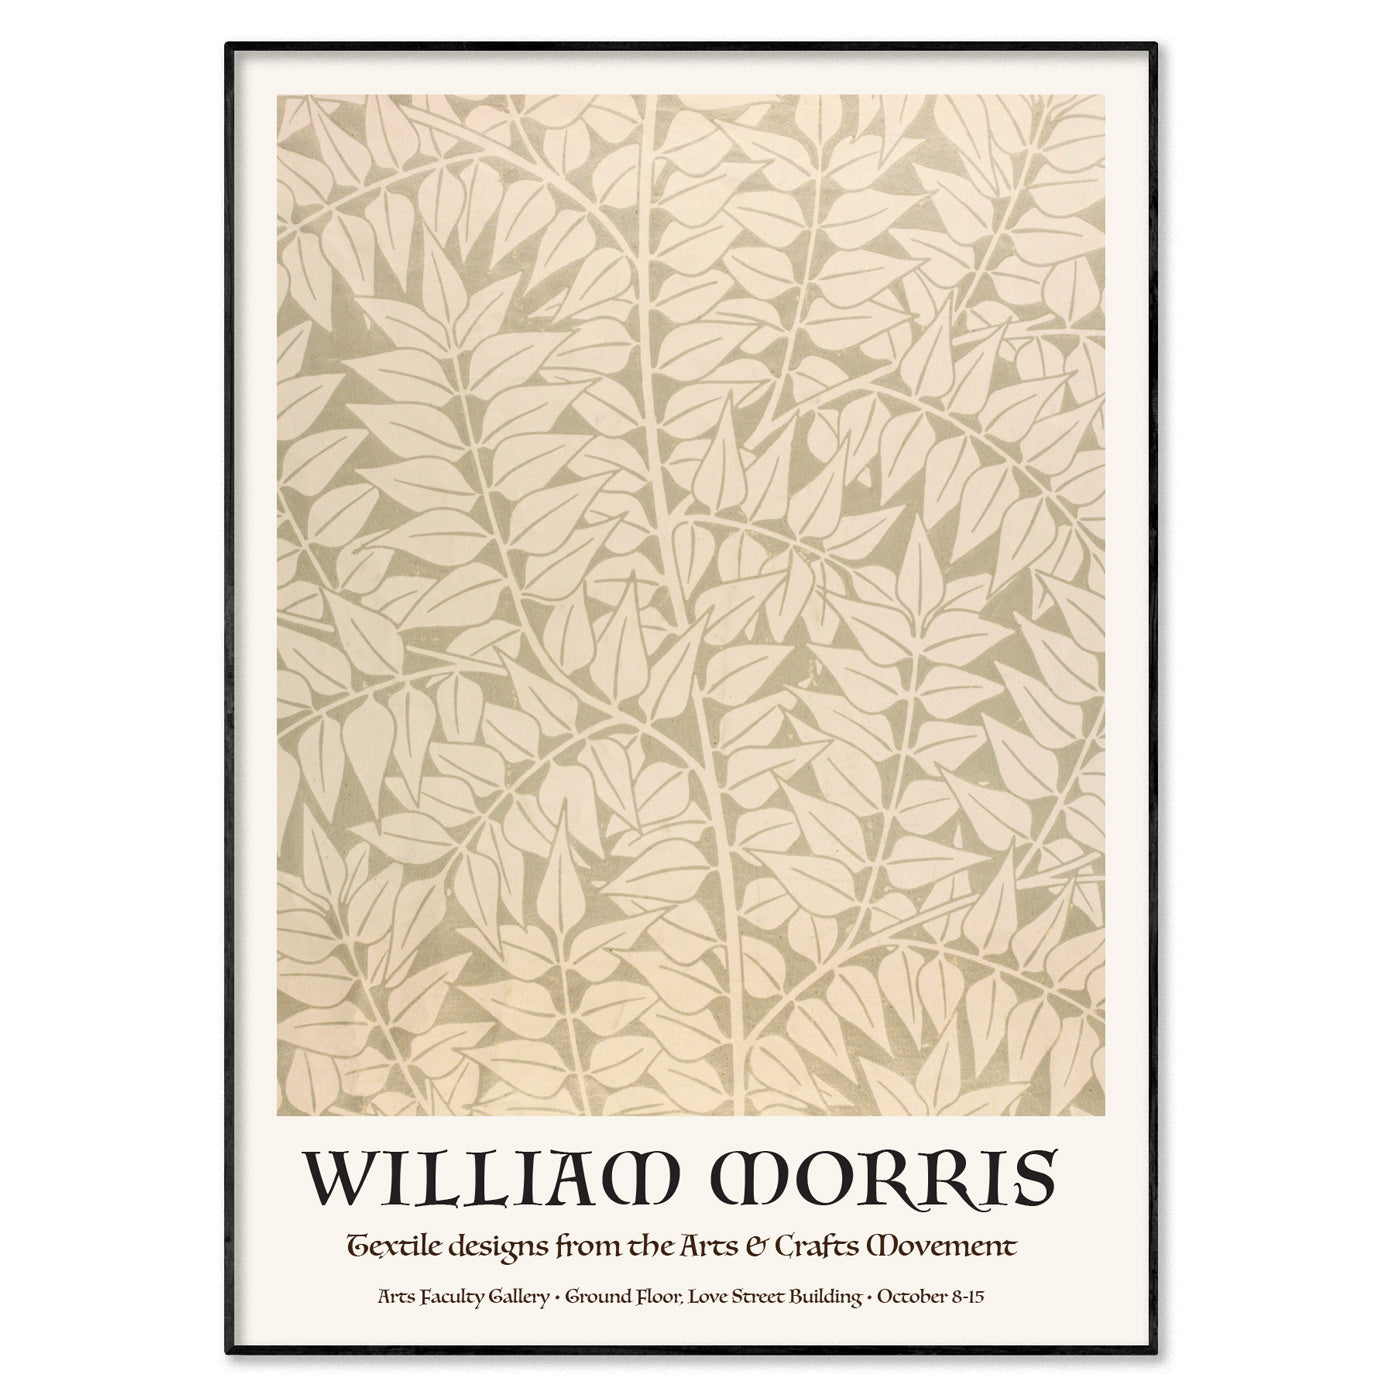 William Morris textile pattern poster